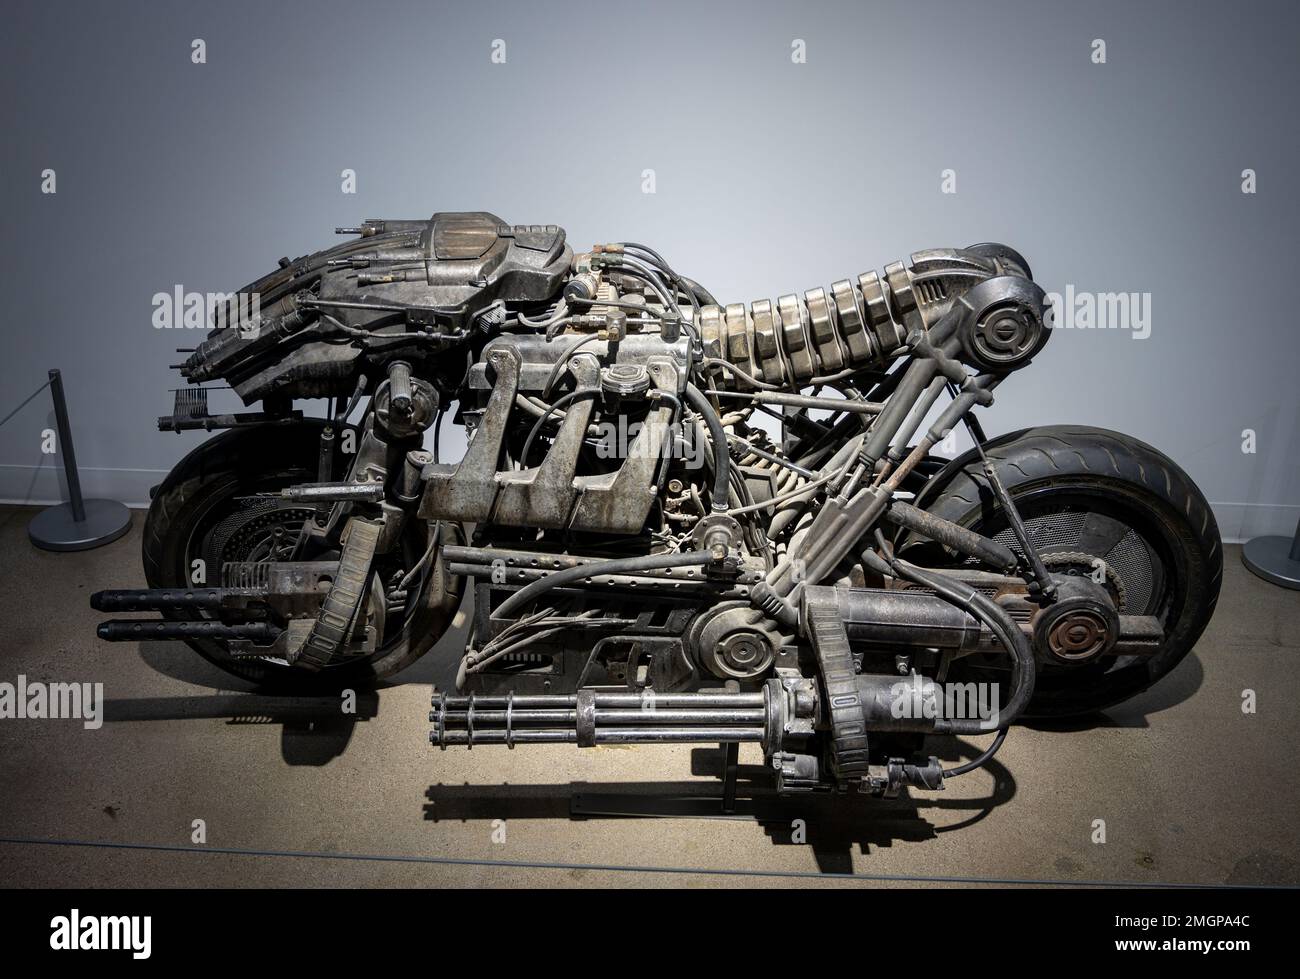 2018 Skynet Moto Terminator motorcycle based on a Ducati Monster 1100s Stock Photo